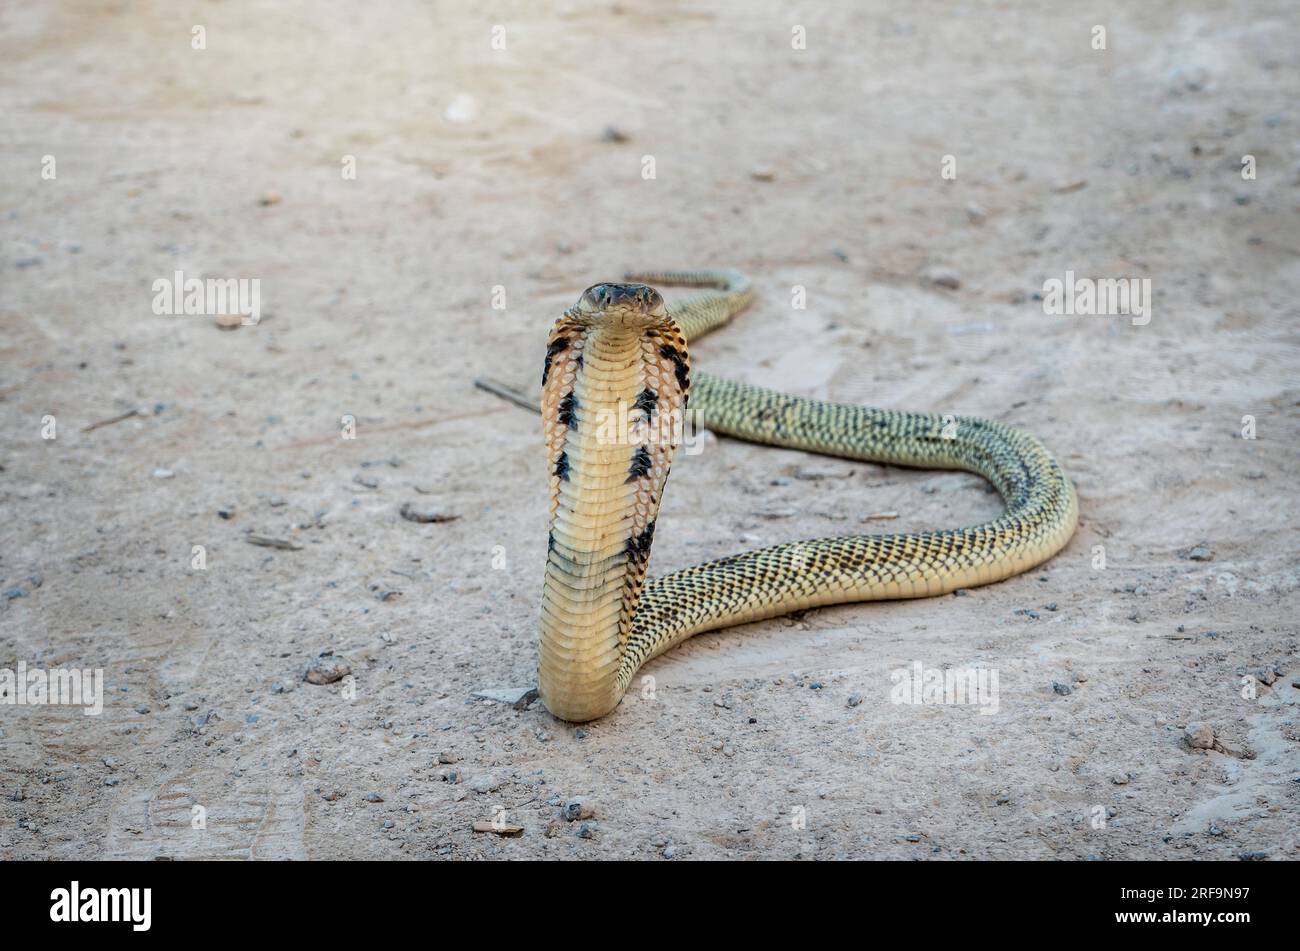 Venomous snake dangerous. Golden Equatorial spitting cobra (Naja sumatrana) can spray venom to the enemy's eye when threatened for self defense. Stock Photo